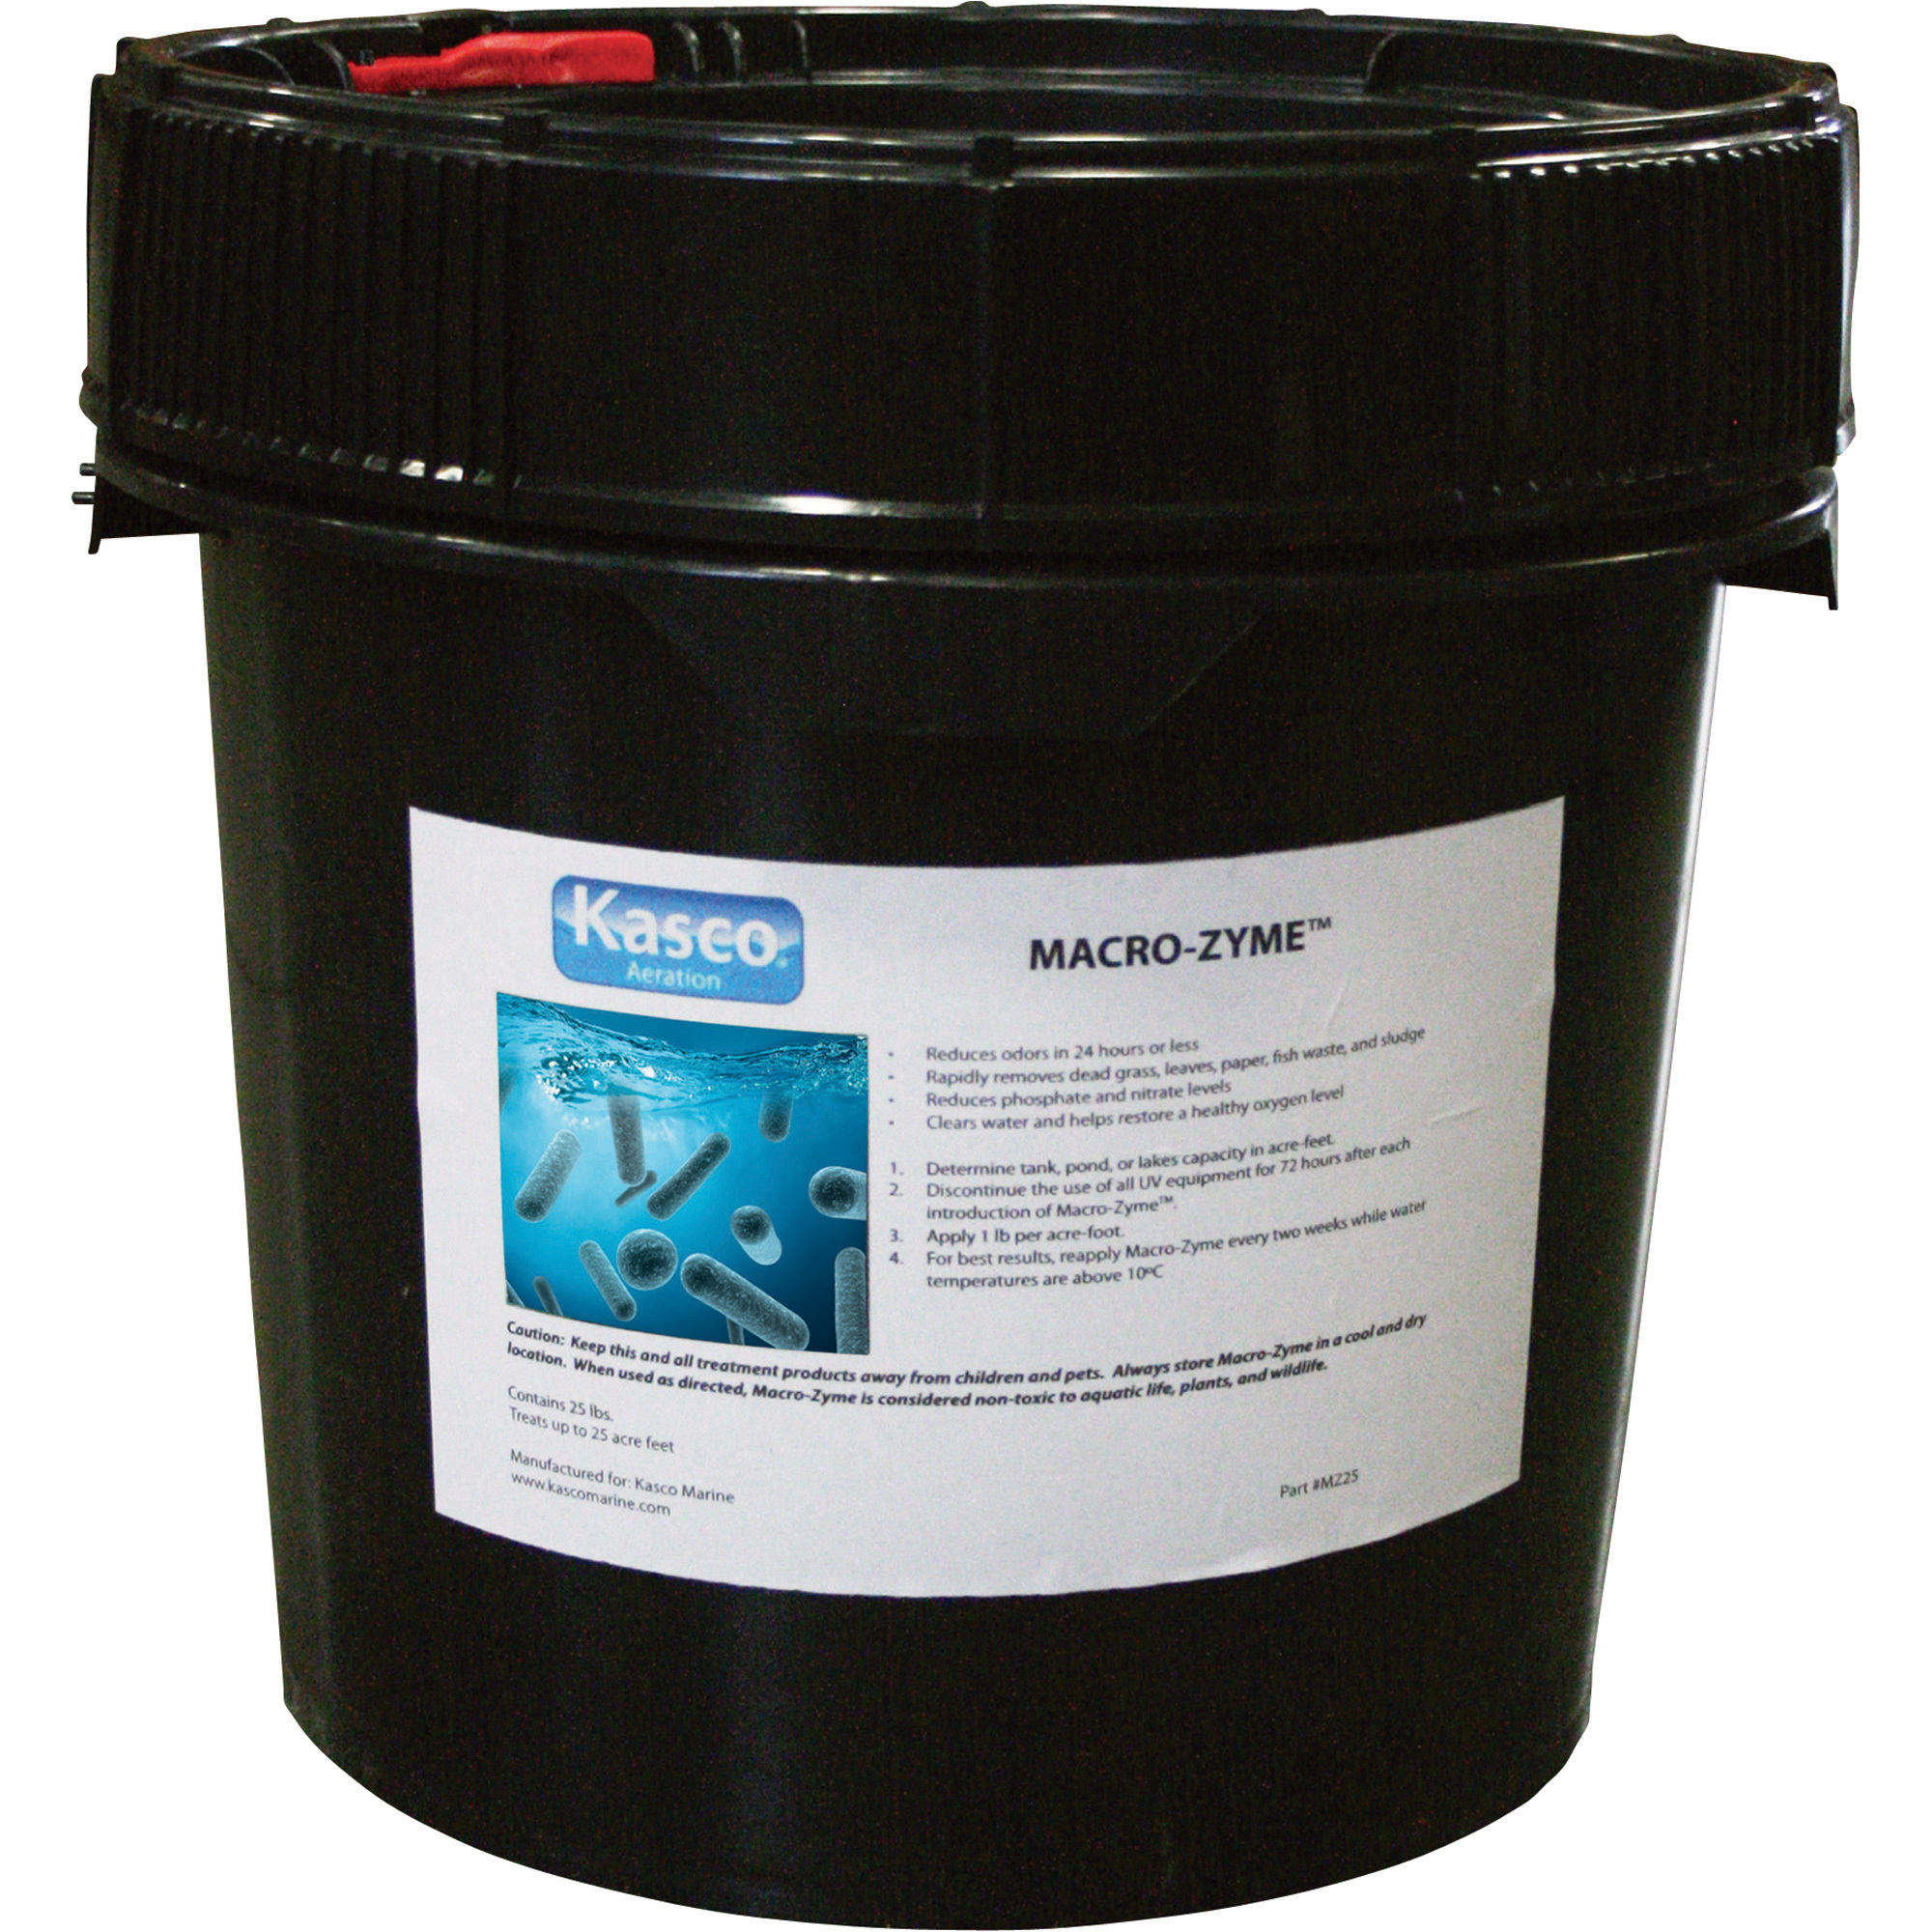 Kasco Marine Macro-Zyme Pond Bacteria, 25-Lb. bulk container, Model MZ25